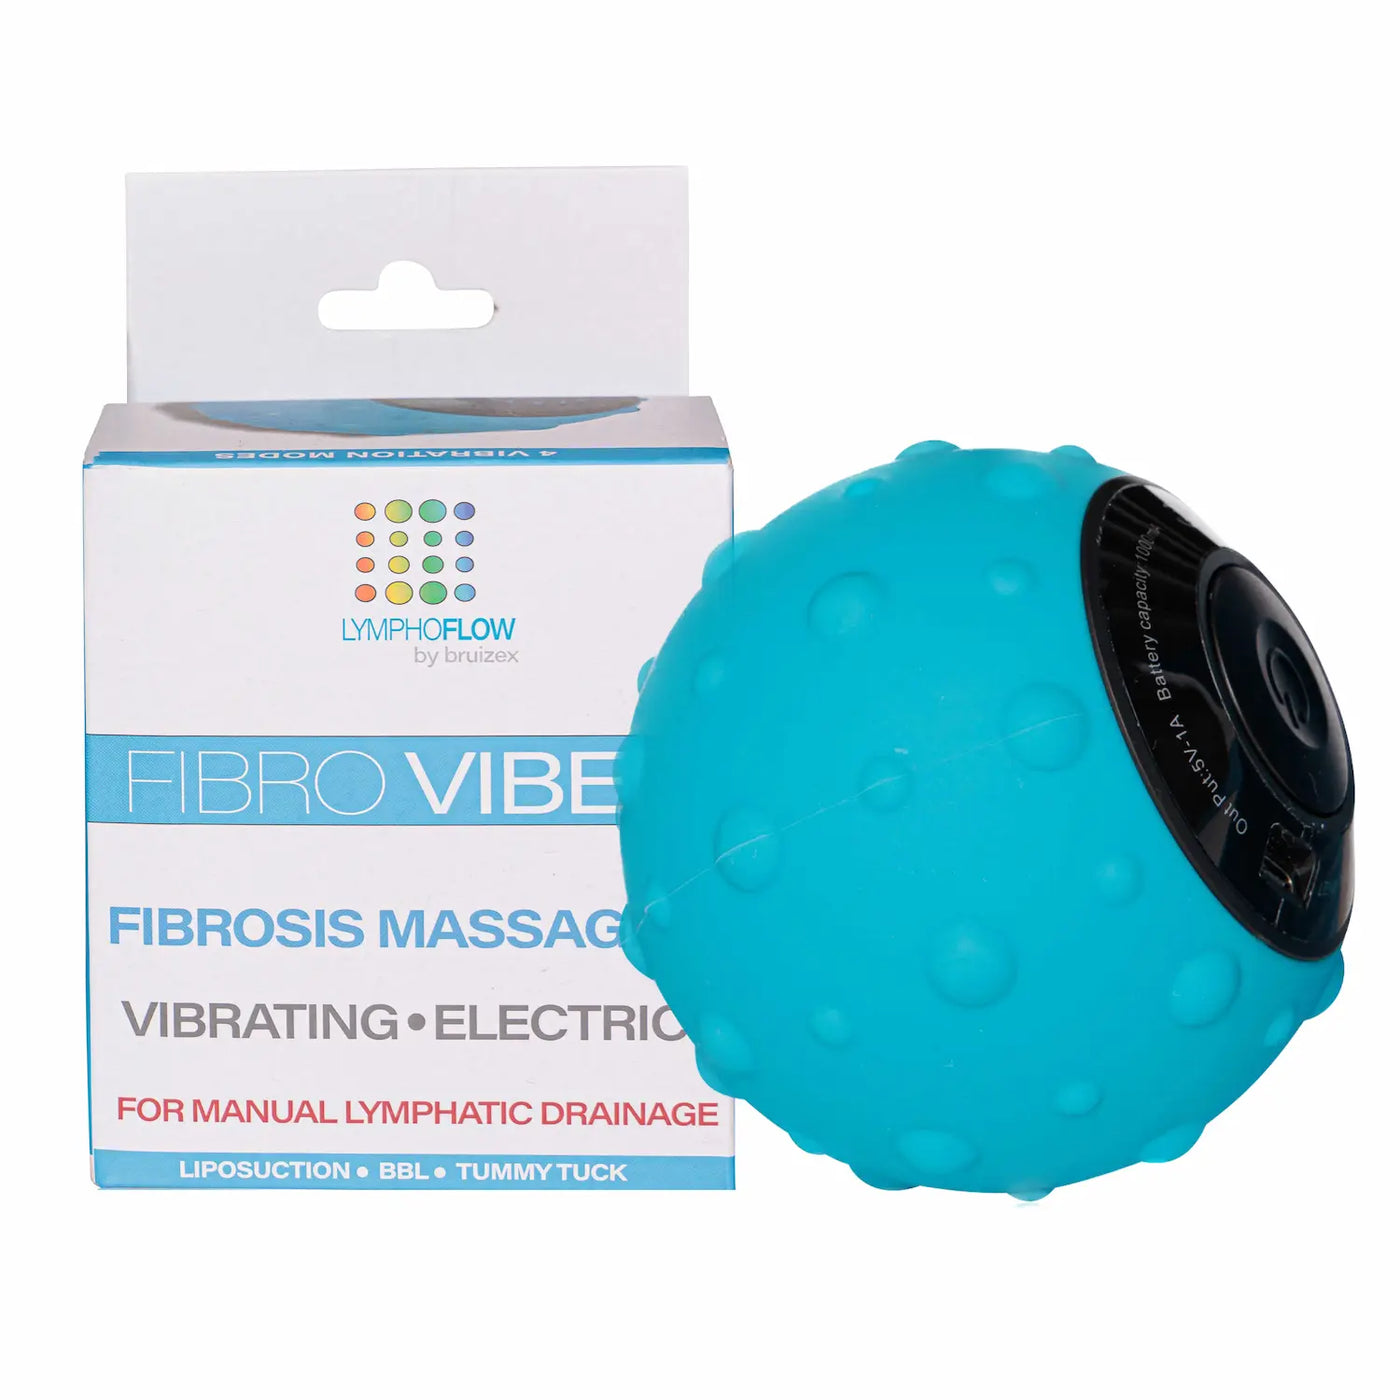 Fibro Viber Fibrosis and Lymphatic Massager